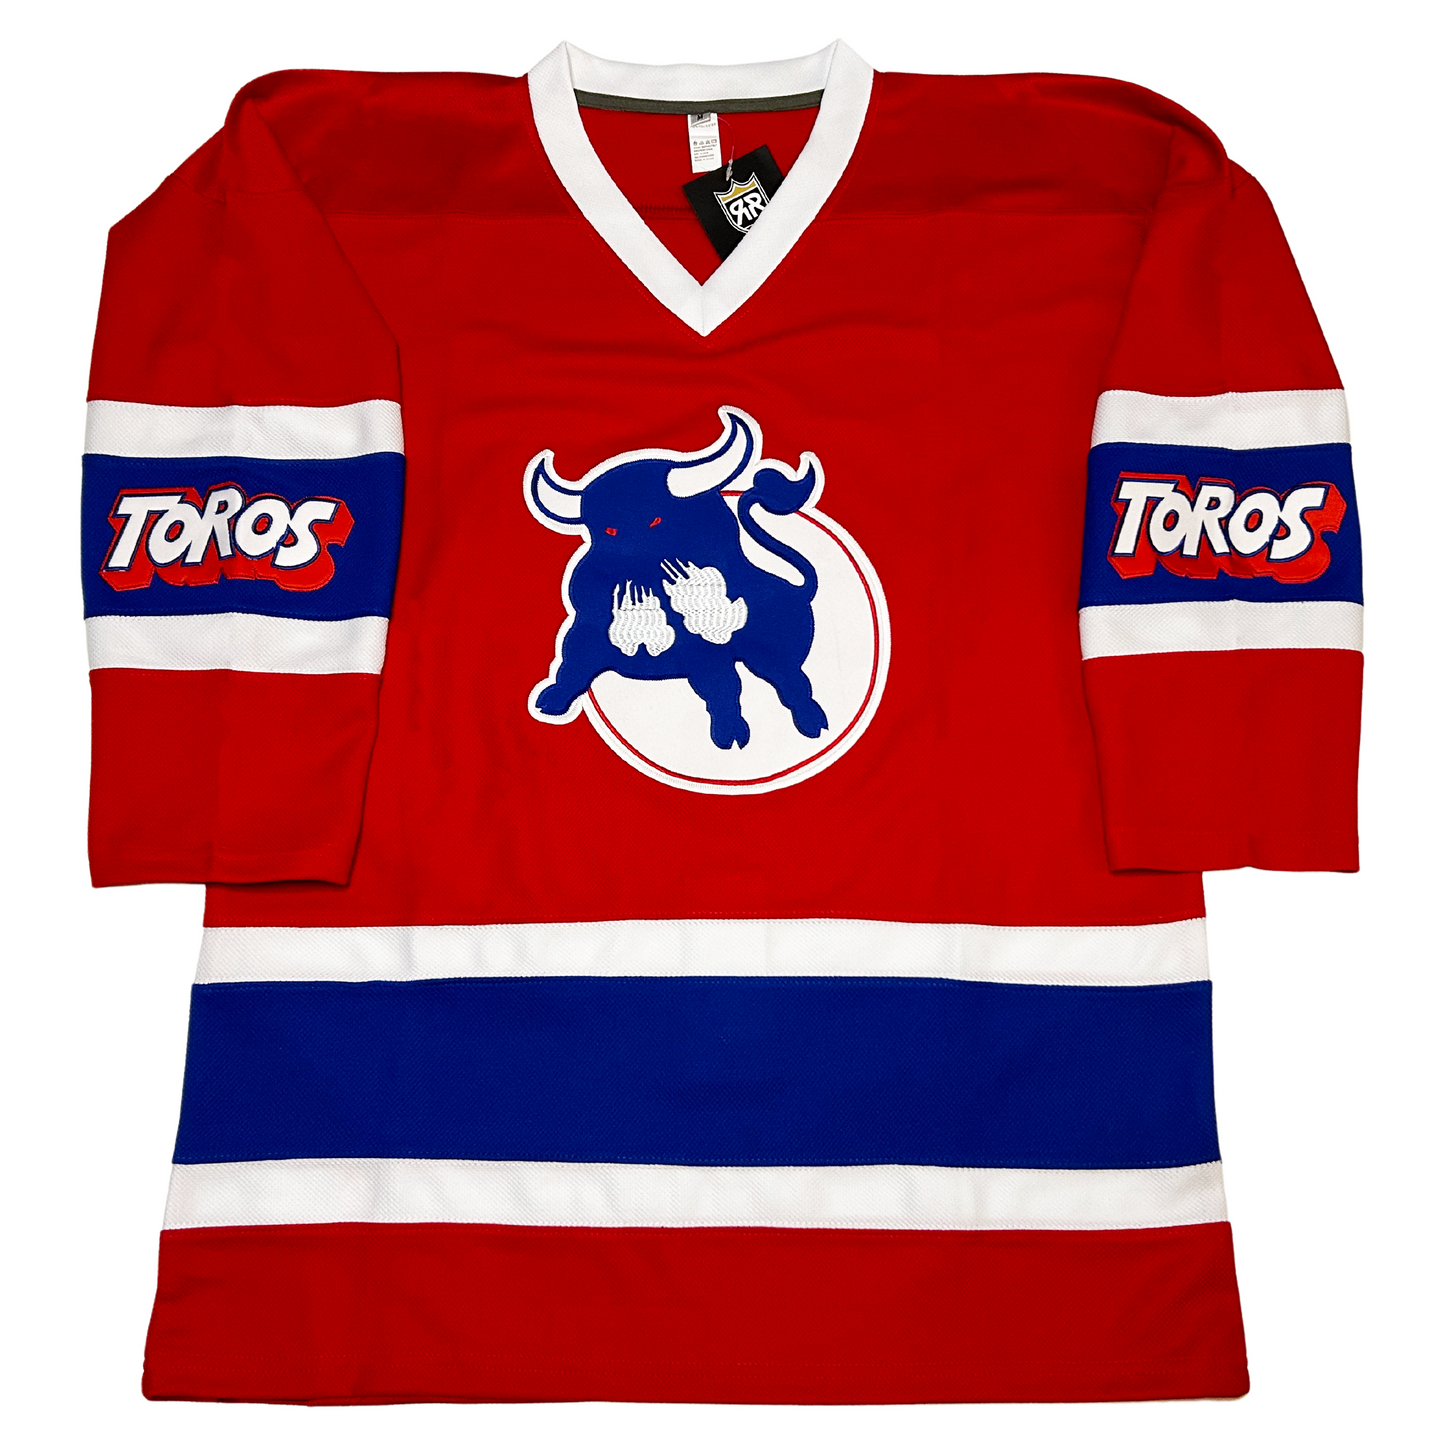 Toronto Toros Vintage Jersey 